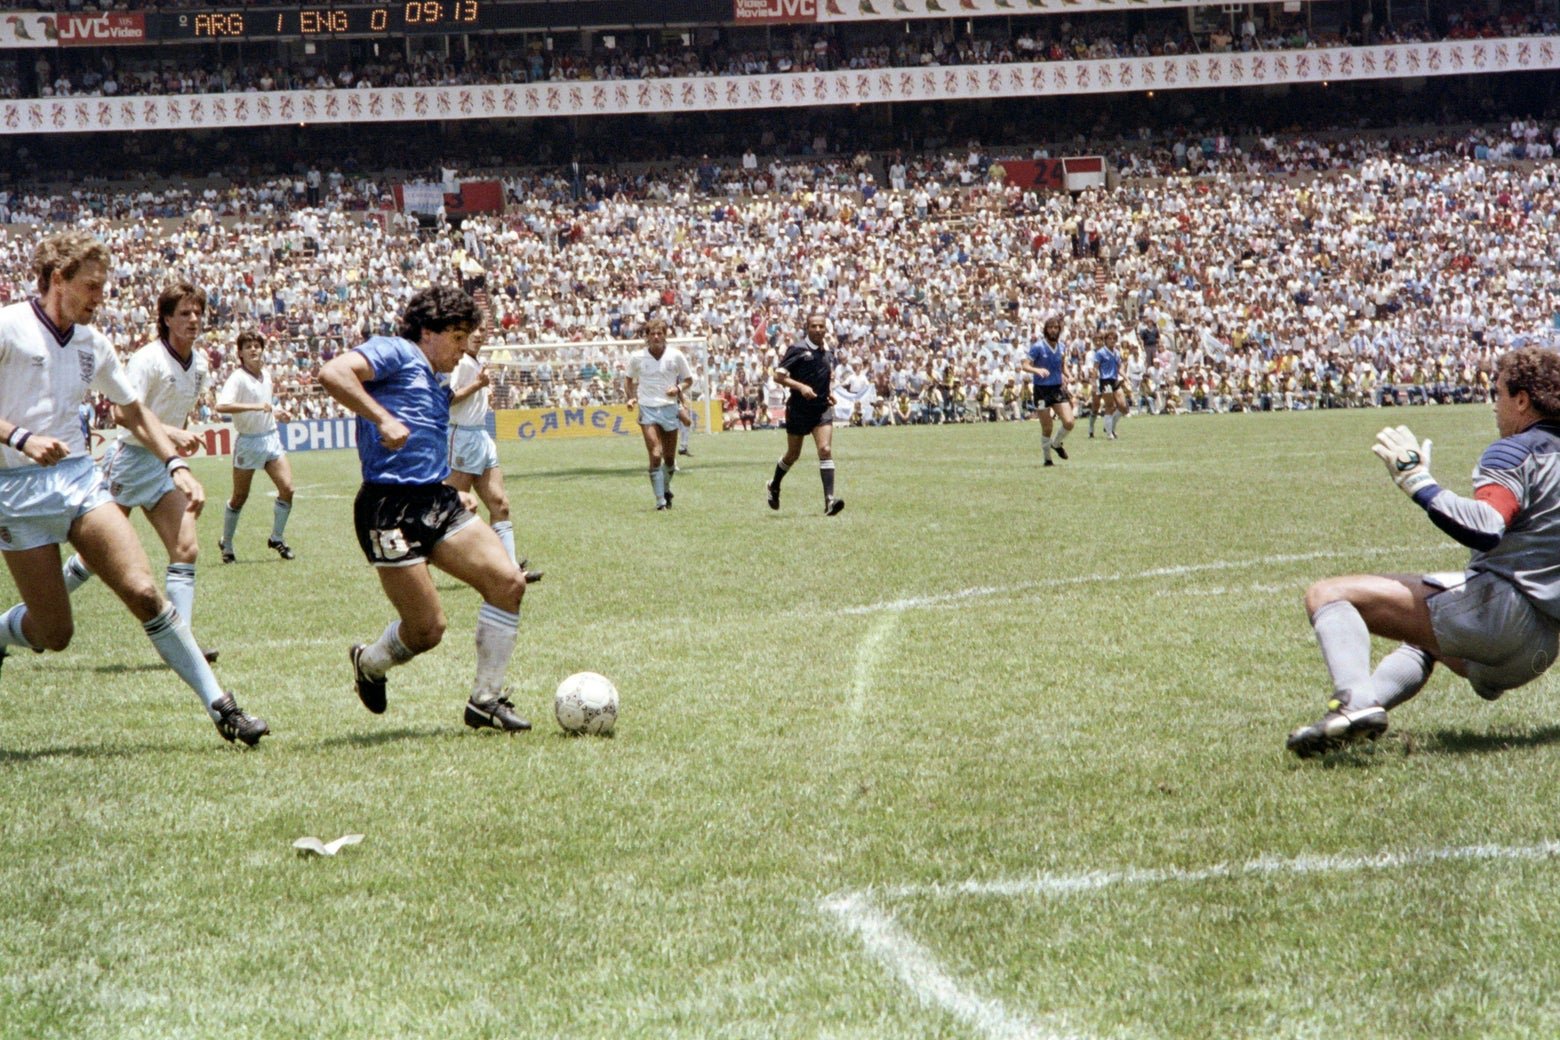 Diego Maradona Was Soccer’s Tortured, Transcendent Megastar